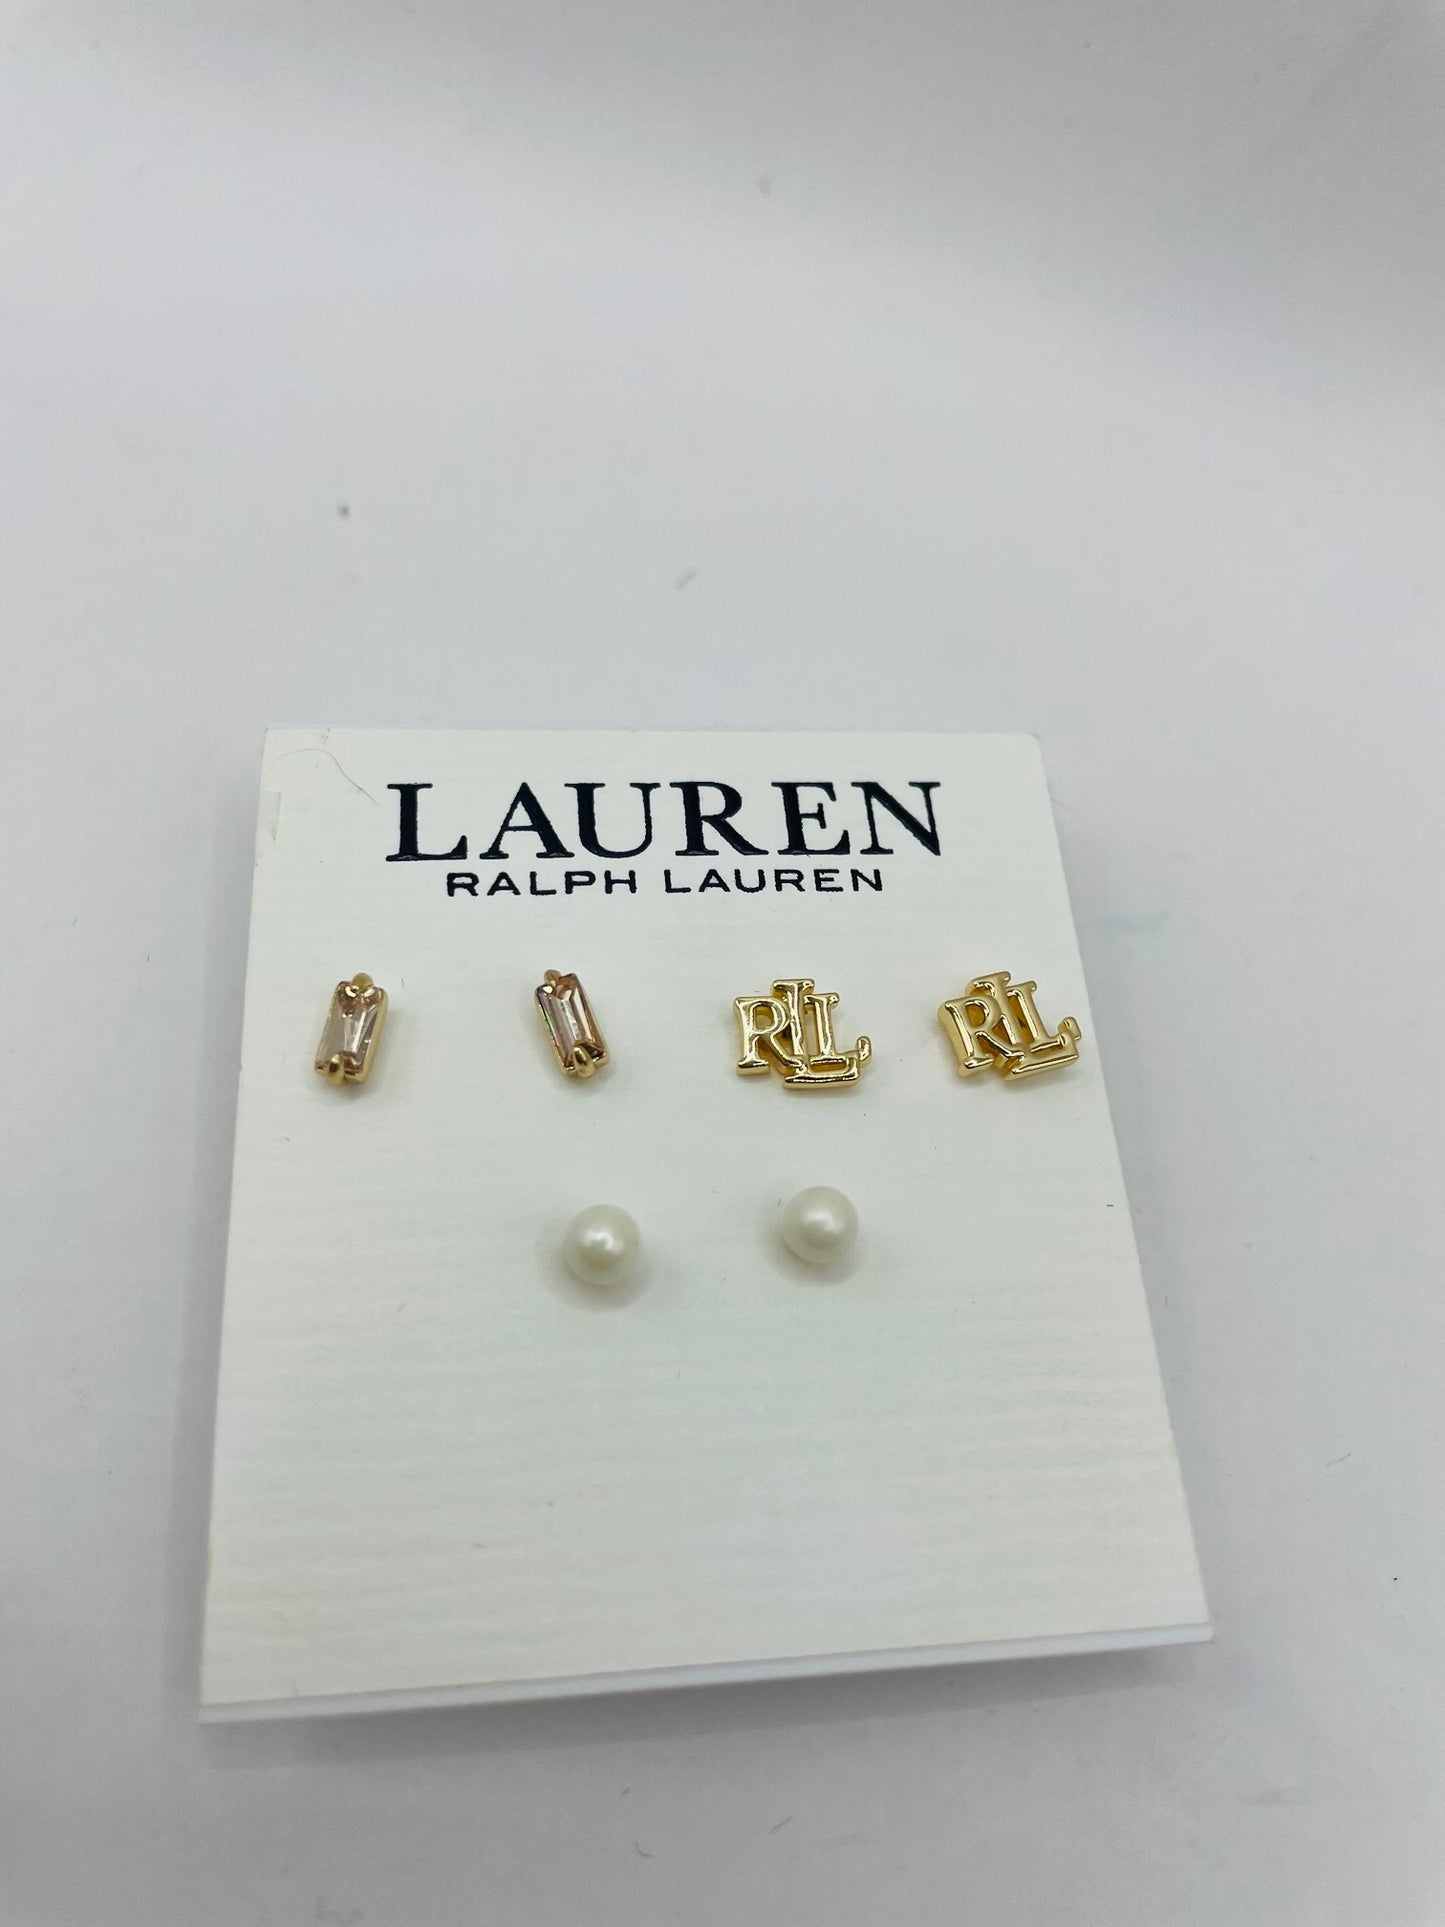 Ralph Lauren earrings set